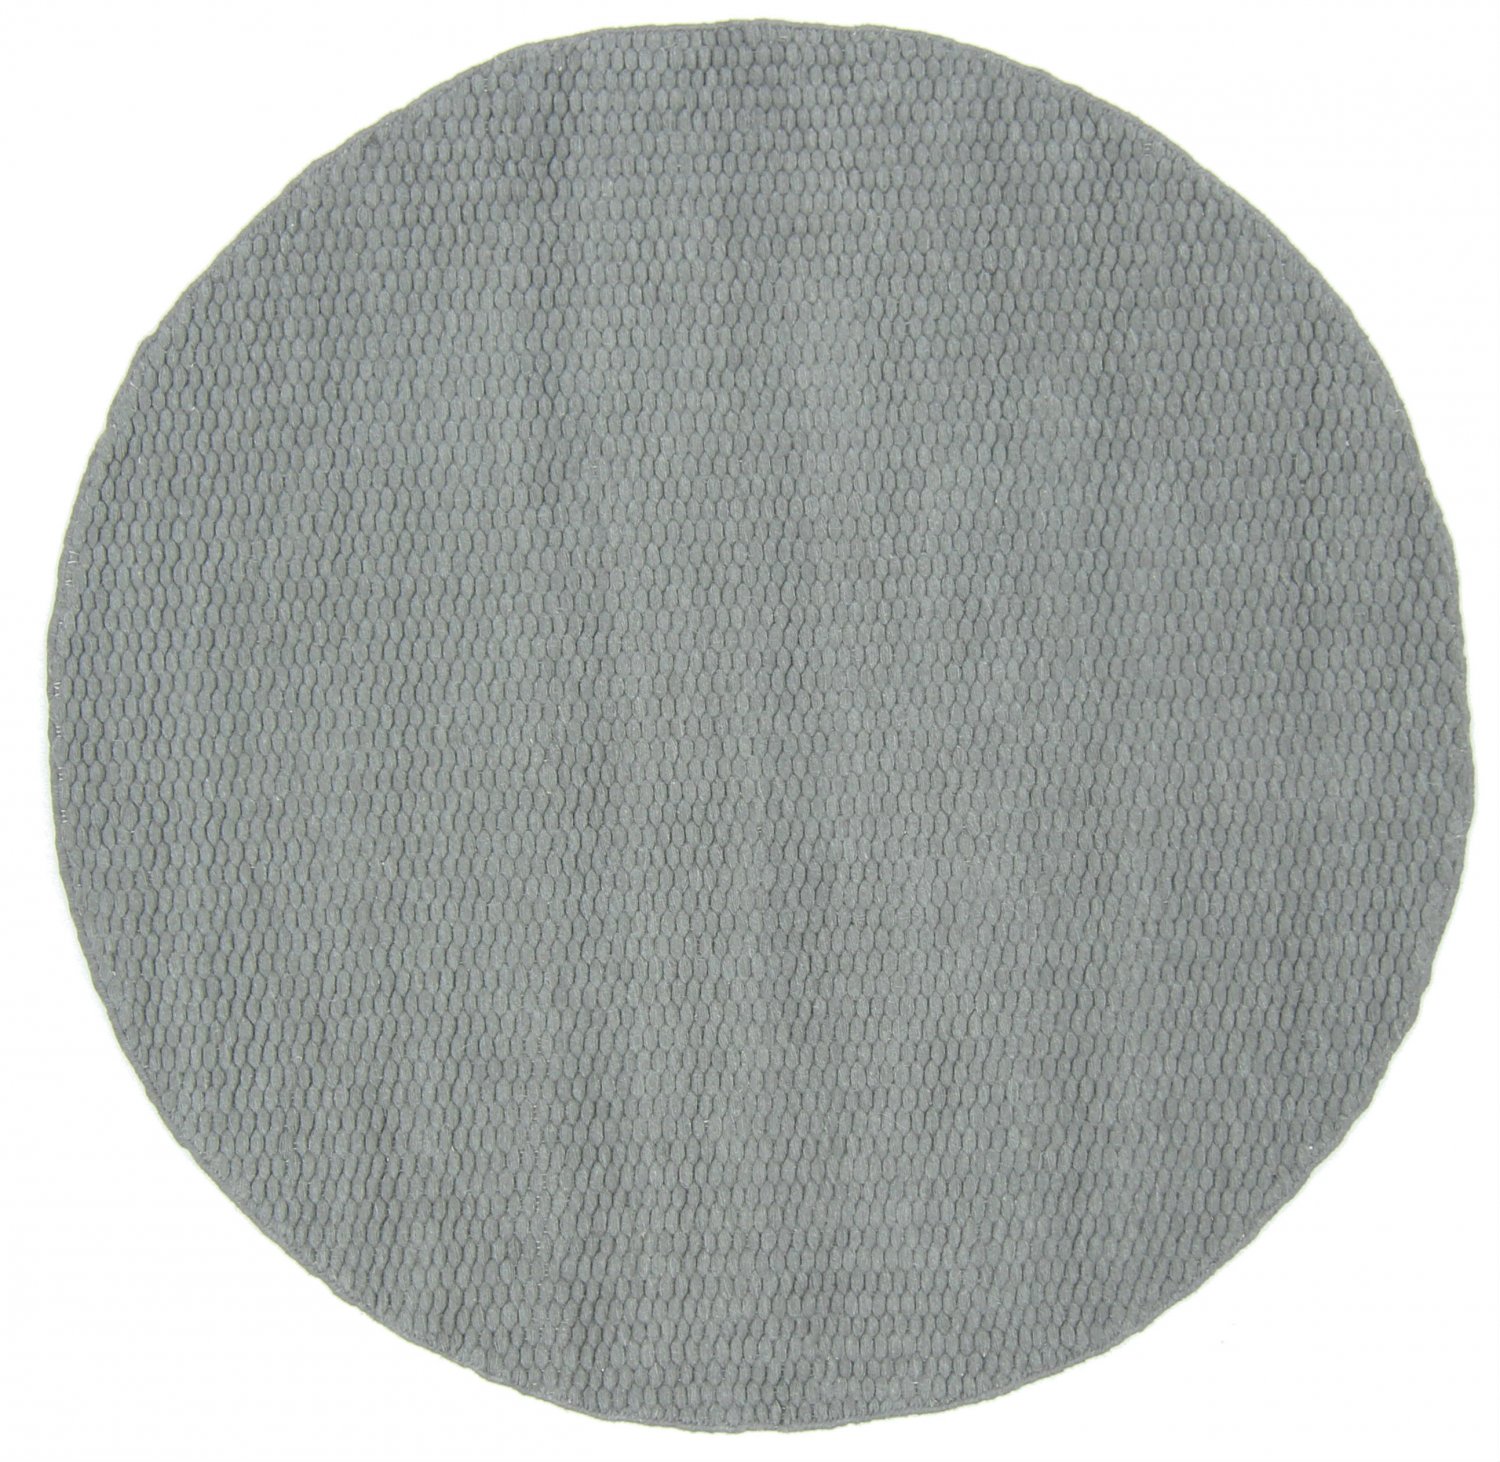 Rund matta - Cartmel (grå)